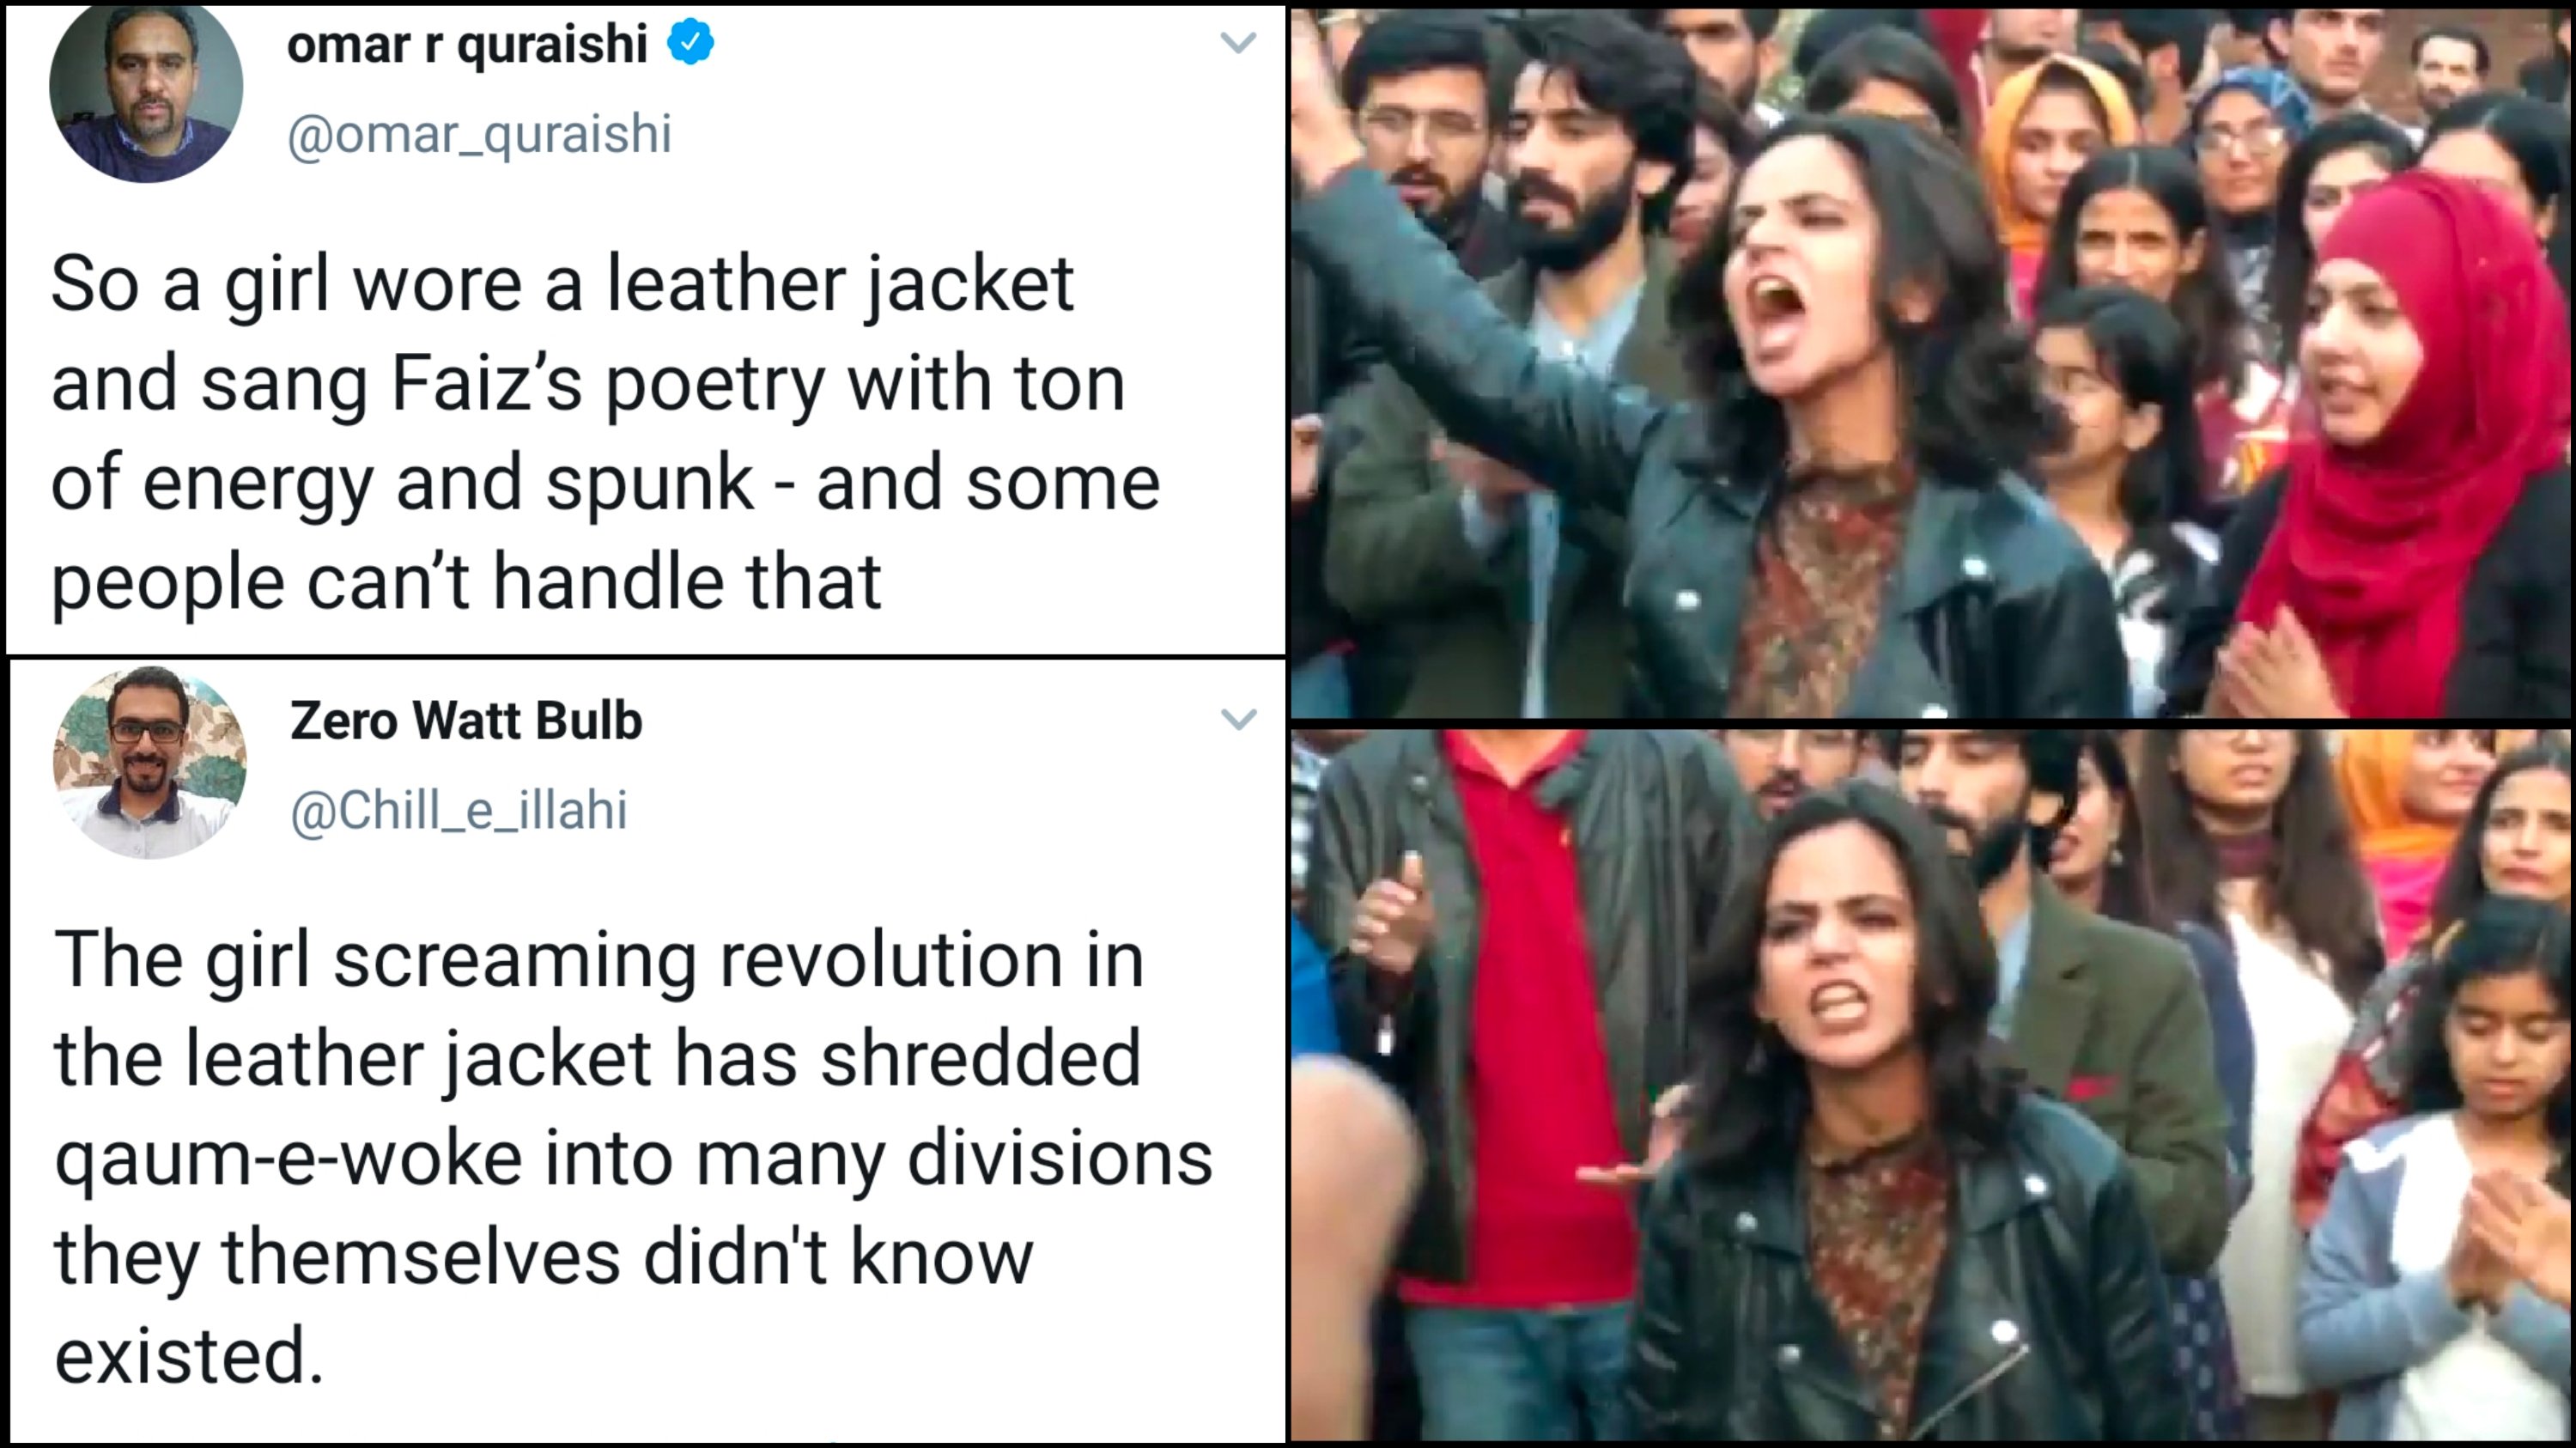 Tamanna Ki Cudai - A girl wore leather jacket, chanted Sarfaroshi ki Tamanna and people just  can't handle it - Diva Magazine